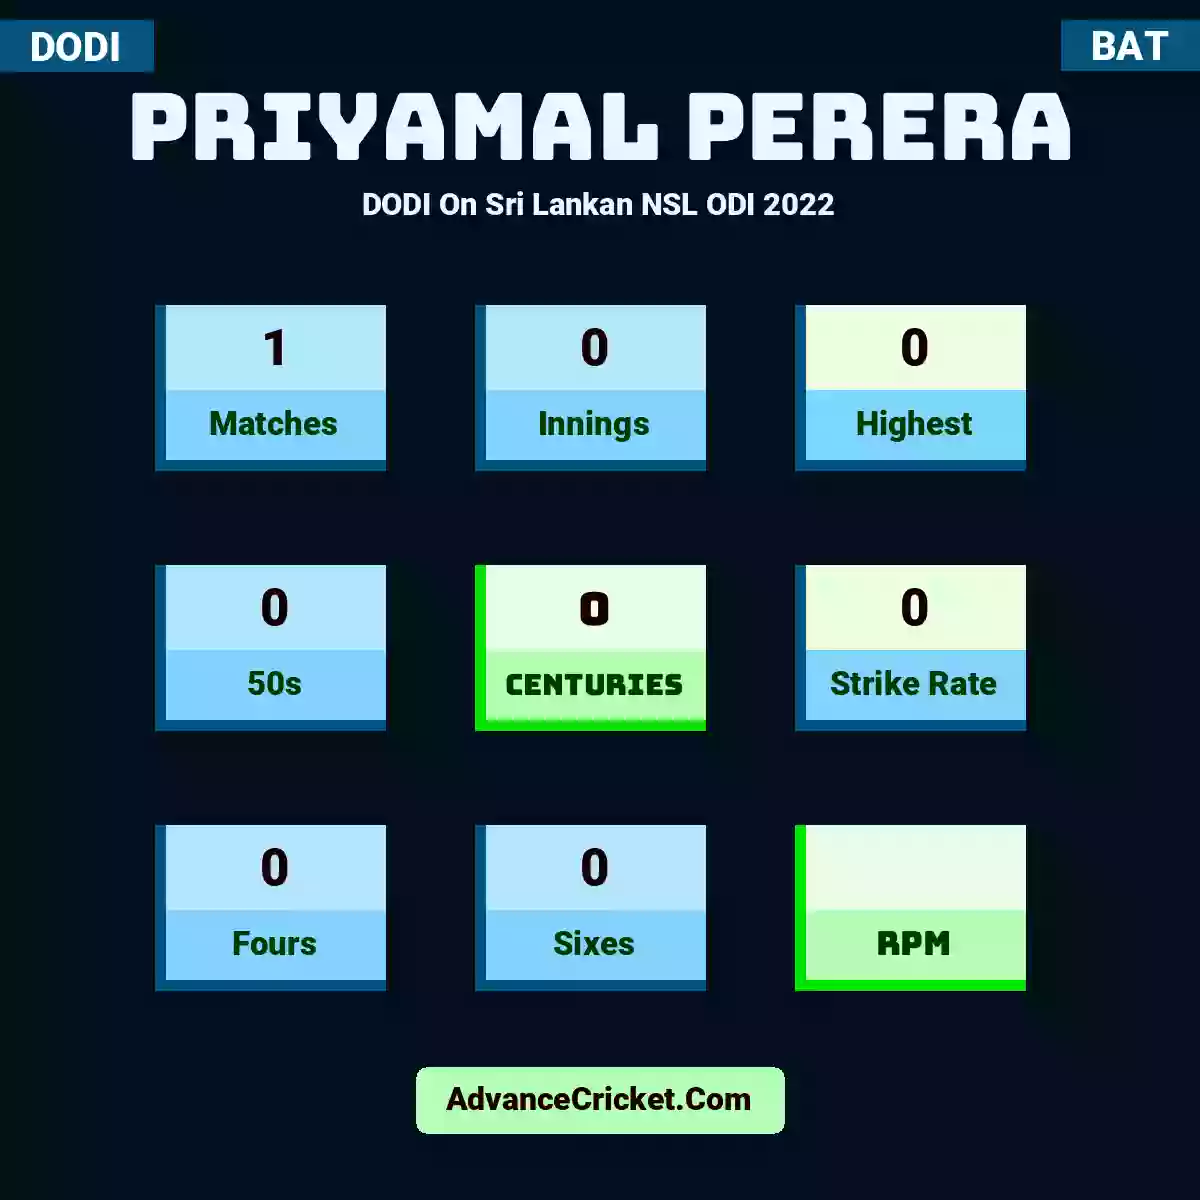 Priyamal Perera DODI  On Sri Lankan NSL ODI 2022, Priyamal Perera played 1 matches, scored 0 runs as highest, 0 half-centuries, and 0 centuries, with a strike rate of 0. P.Perera hit 0 fours and 0 sixes.